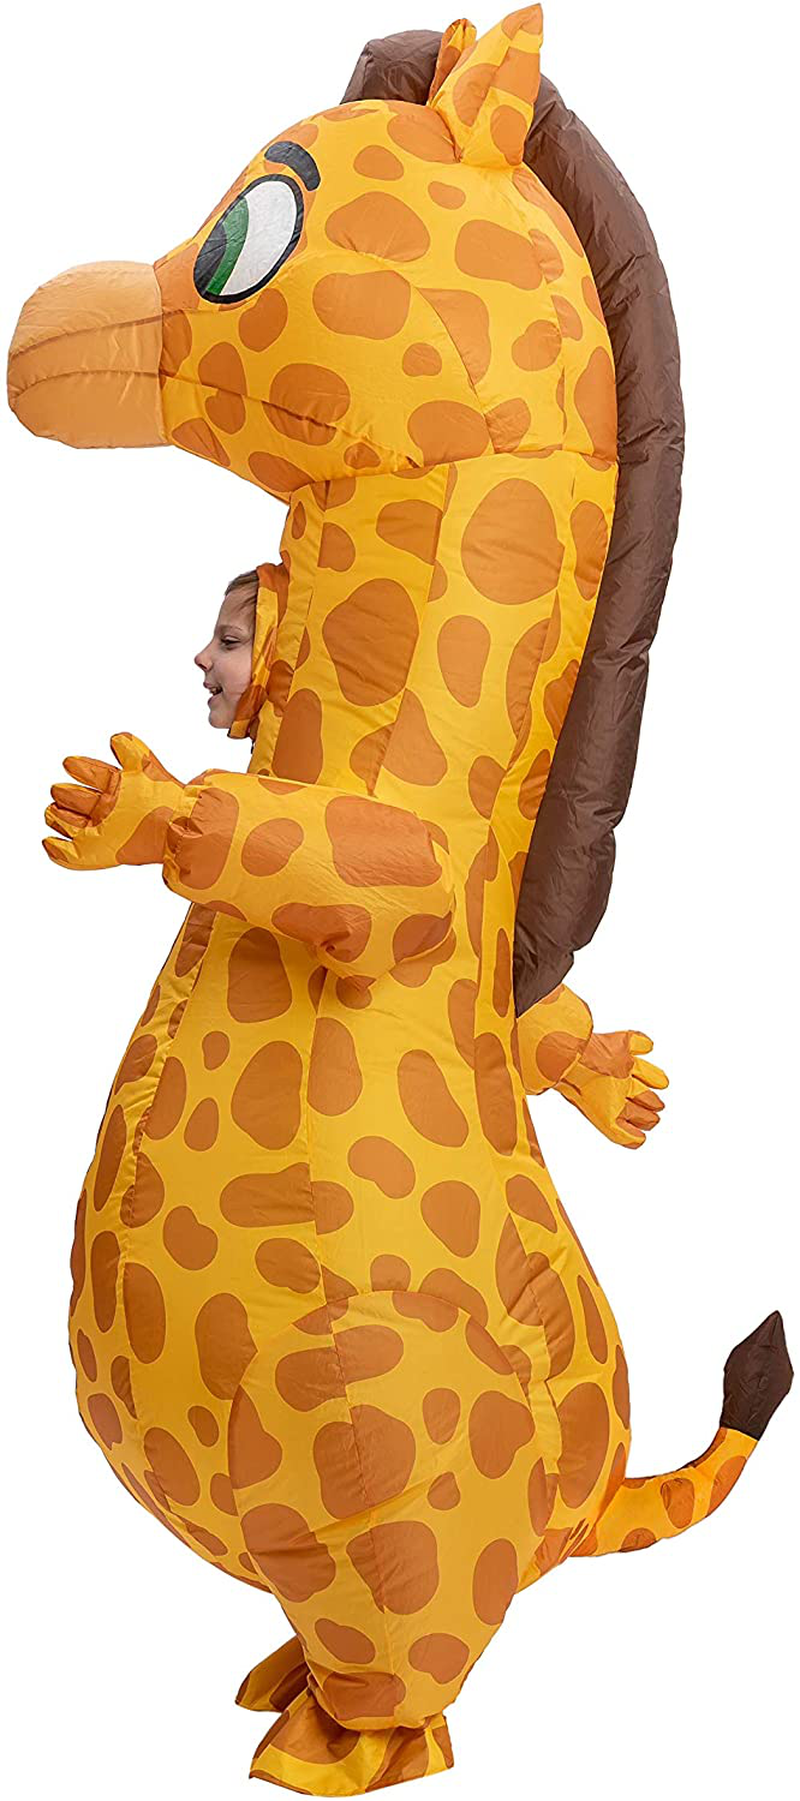 Spooktacular Creations Child Unisex Giraffe Full Body Inflatable Costume - Medium Child (7-10) Apparel & Accessories > Costumes & Accessories > Costumes Spooktacular Creations   